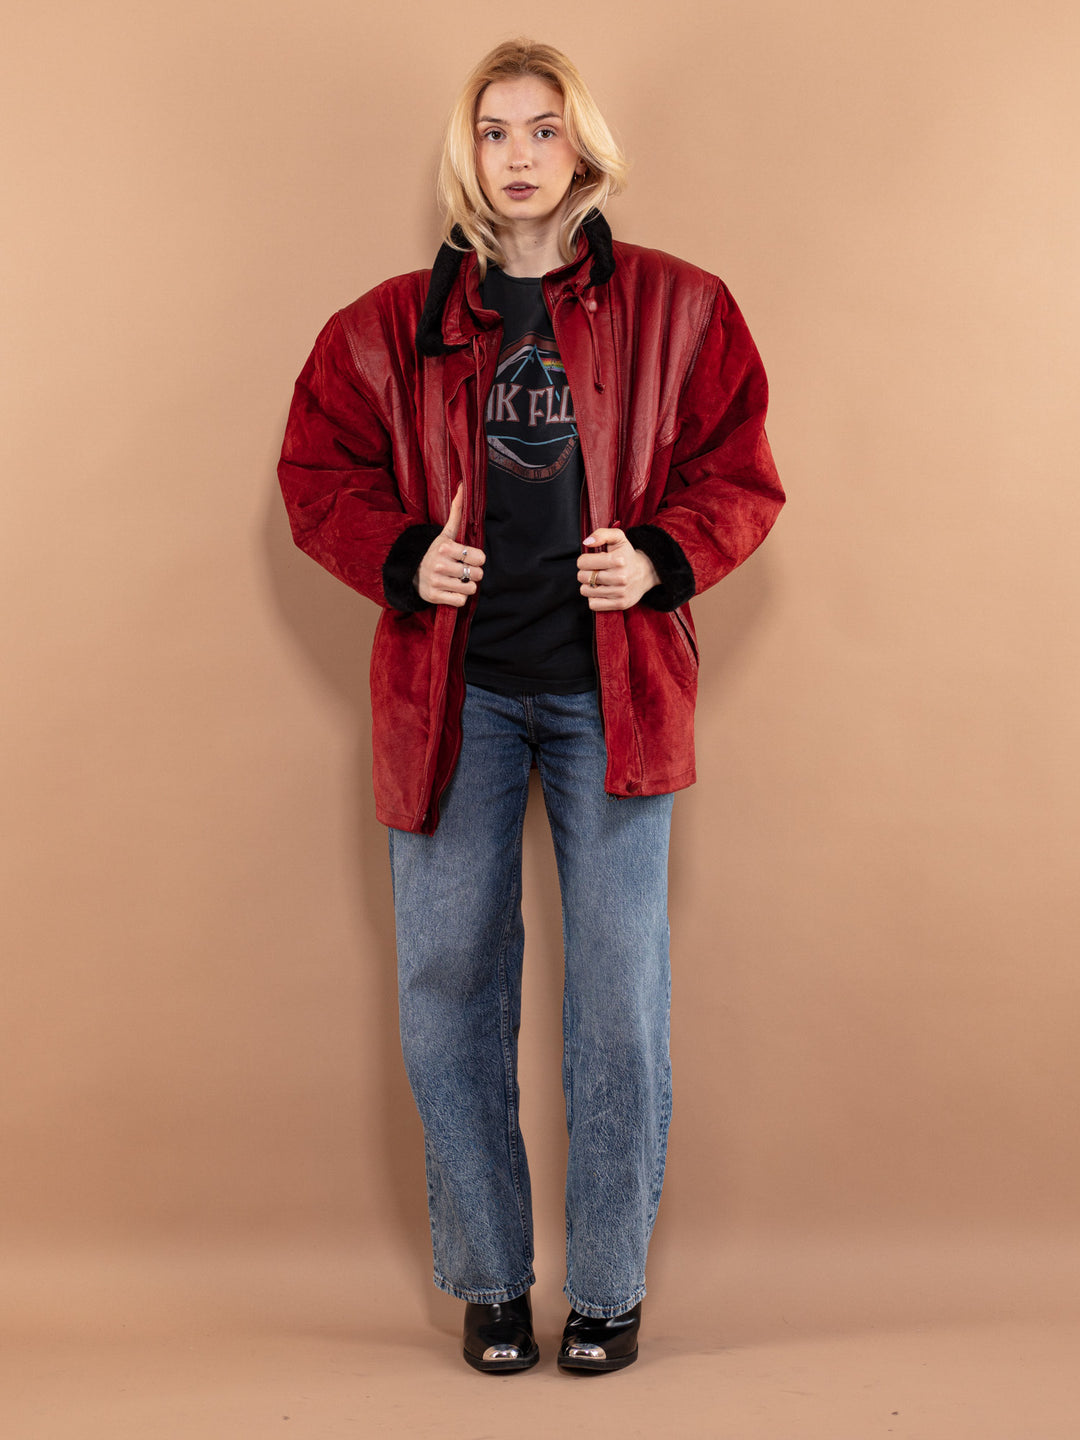 Red Leather Parka Coat 80s, Size M Medium, Red Retro Leather Coat, 80's Womens Clothing, Longline Leather Jacket, Leatherwear